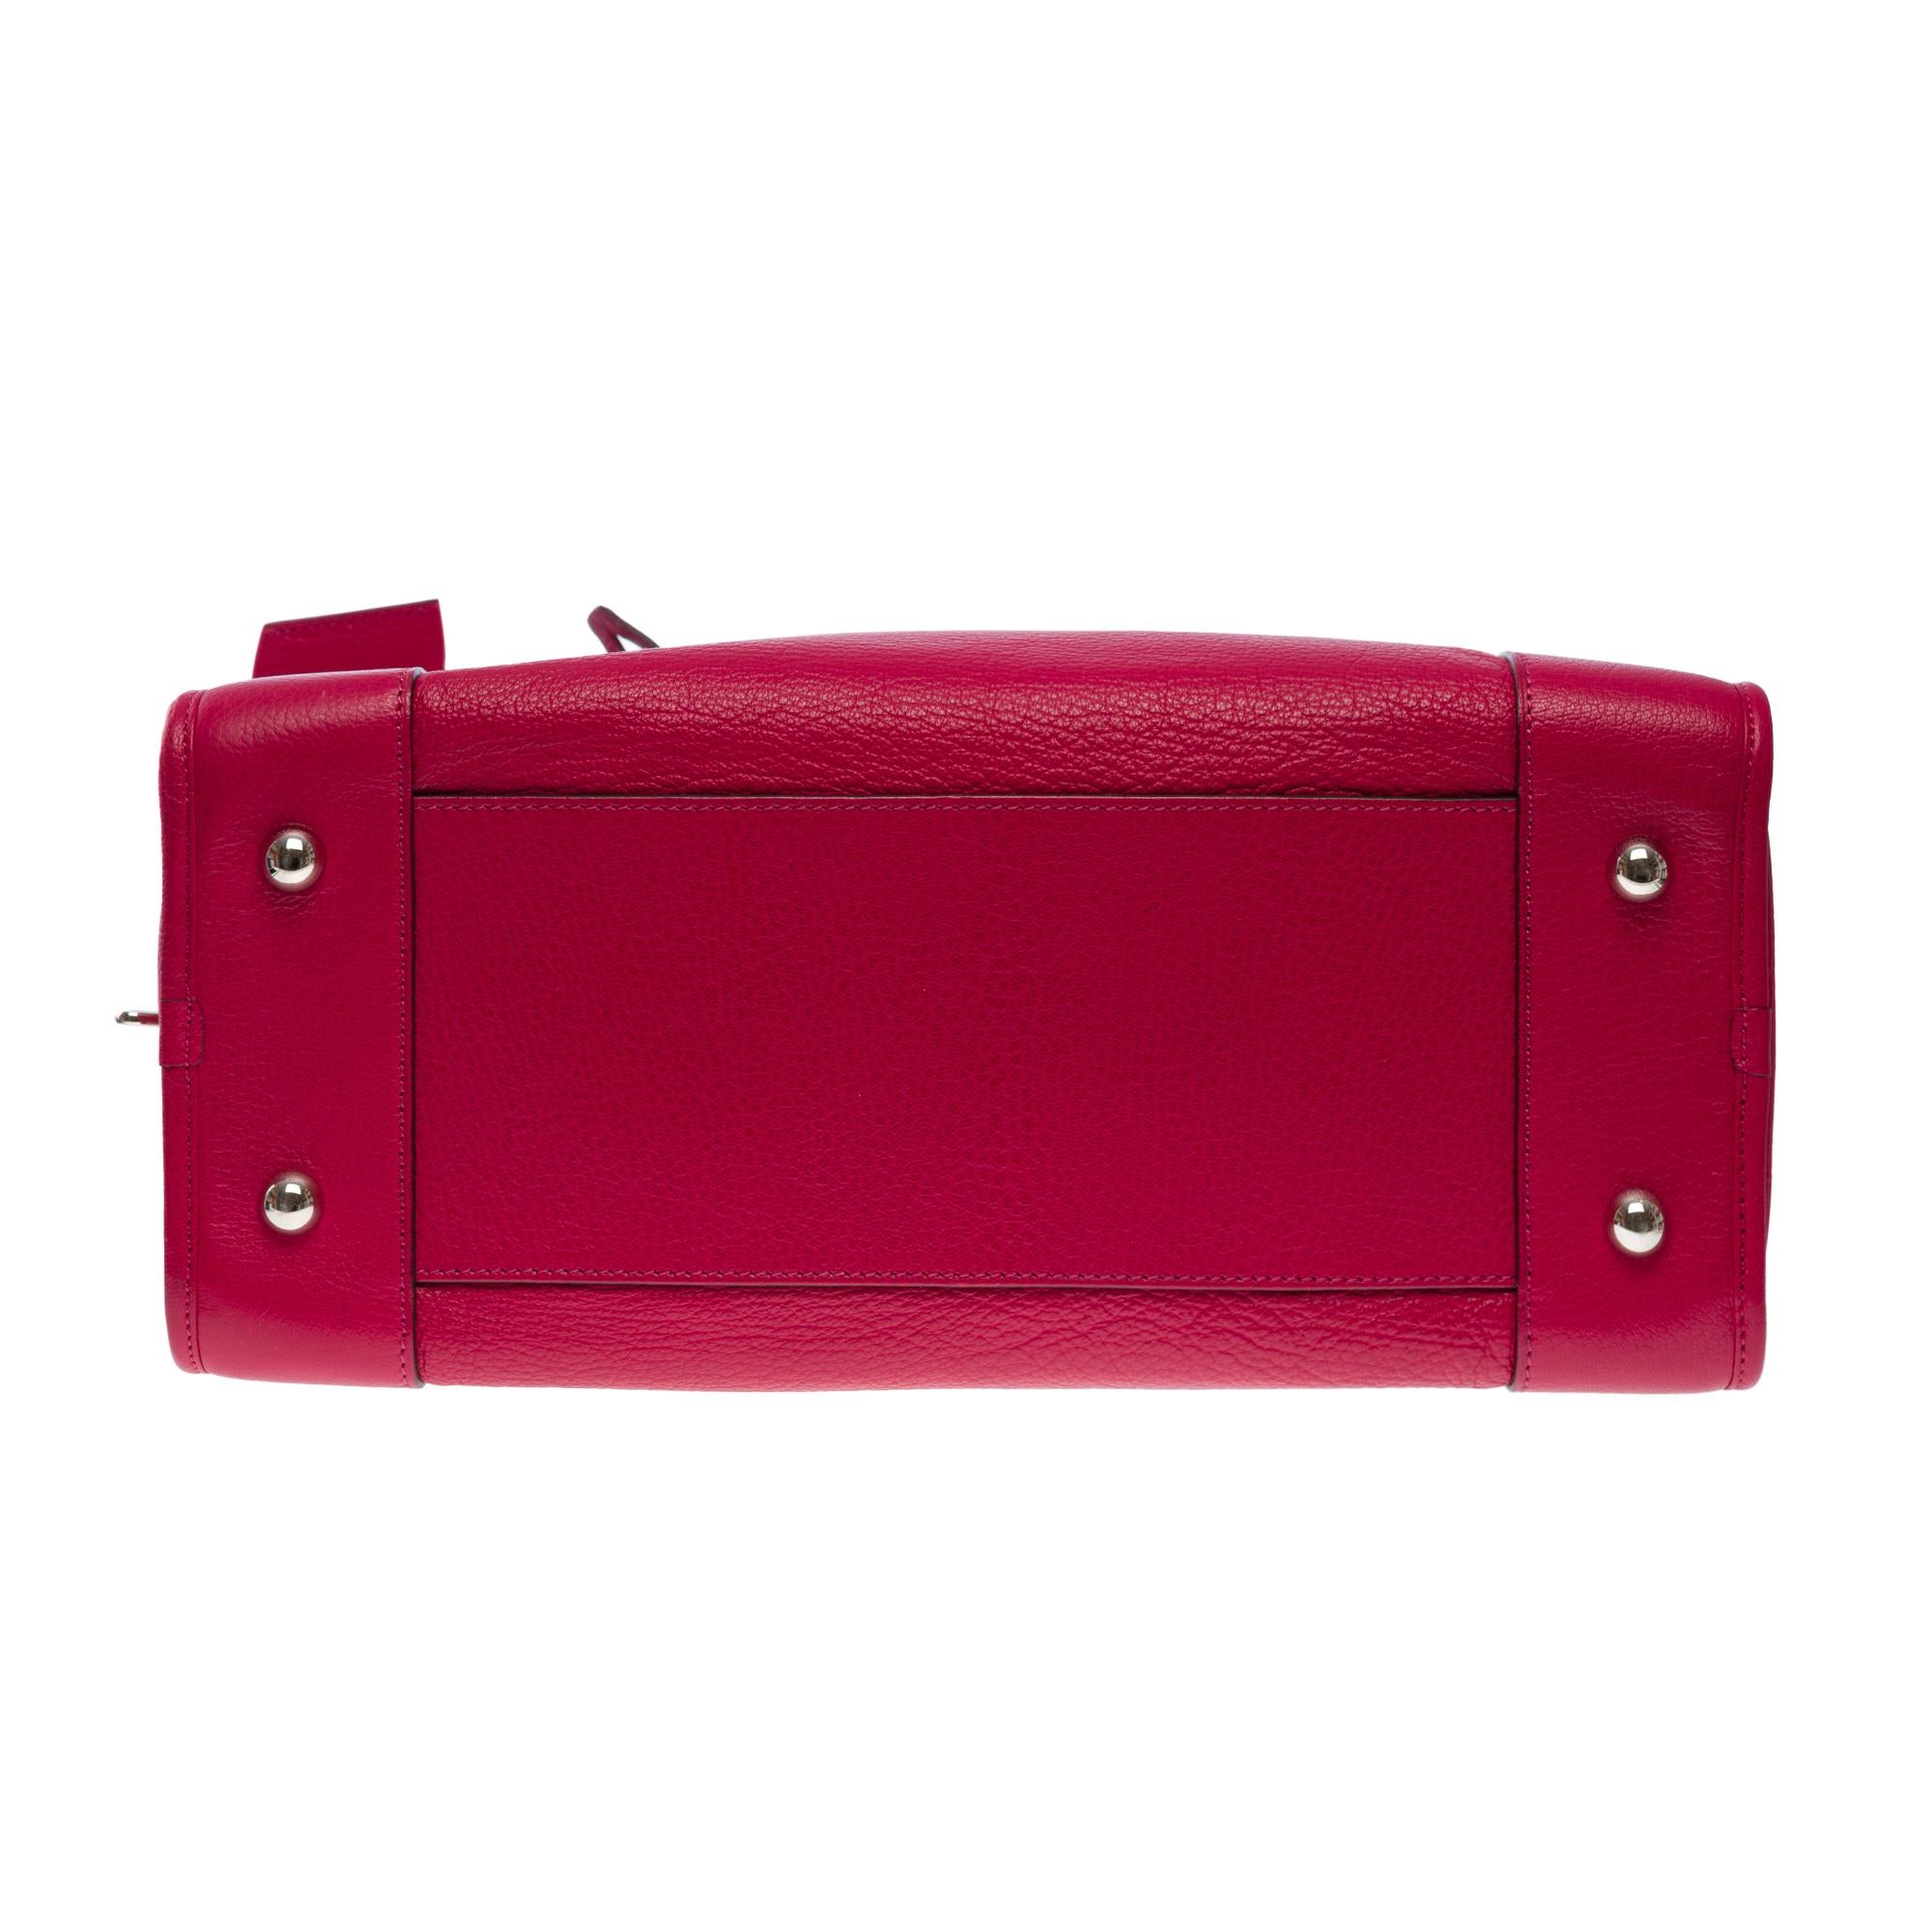 Delightful Loewe Amazona 36 (GM) handbag in red leather, SHW For Sale 6